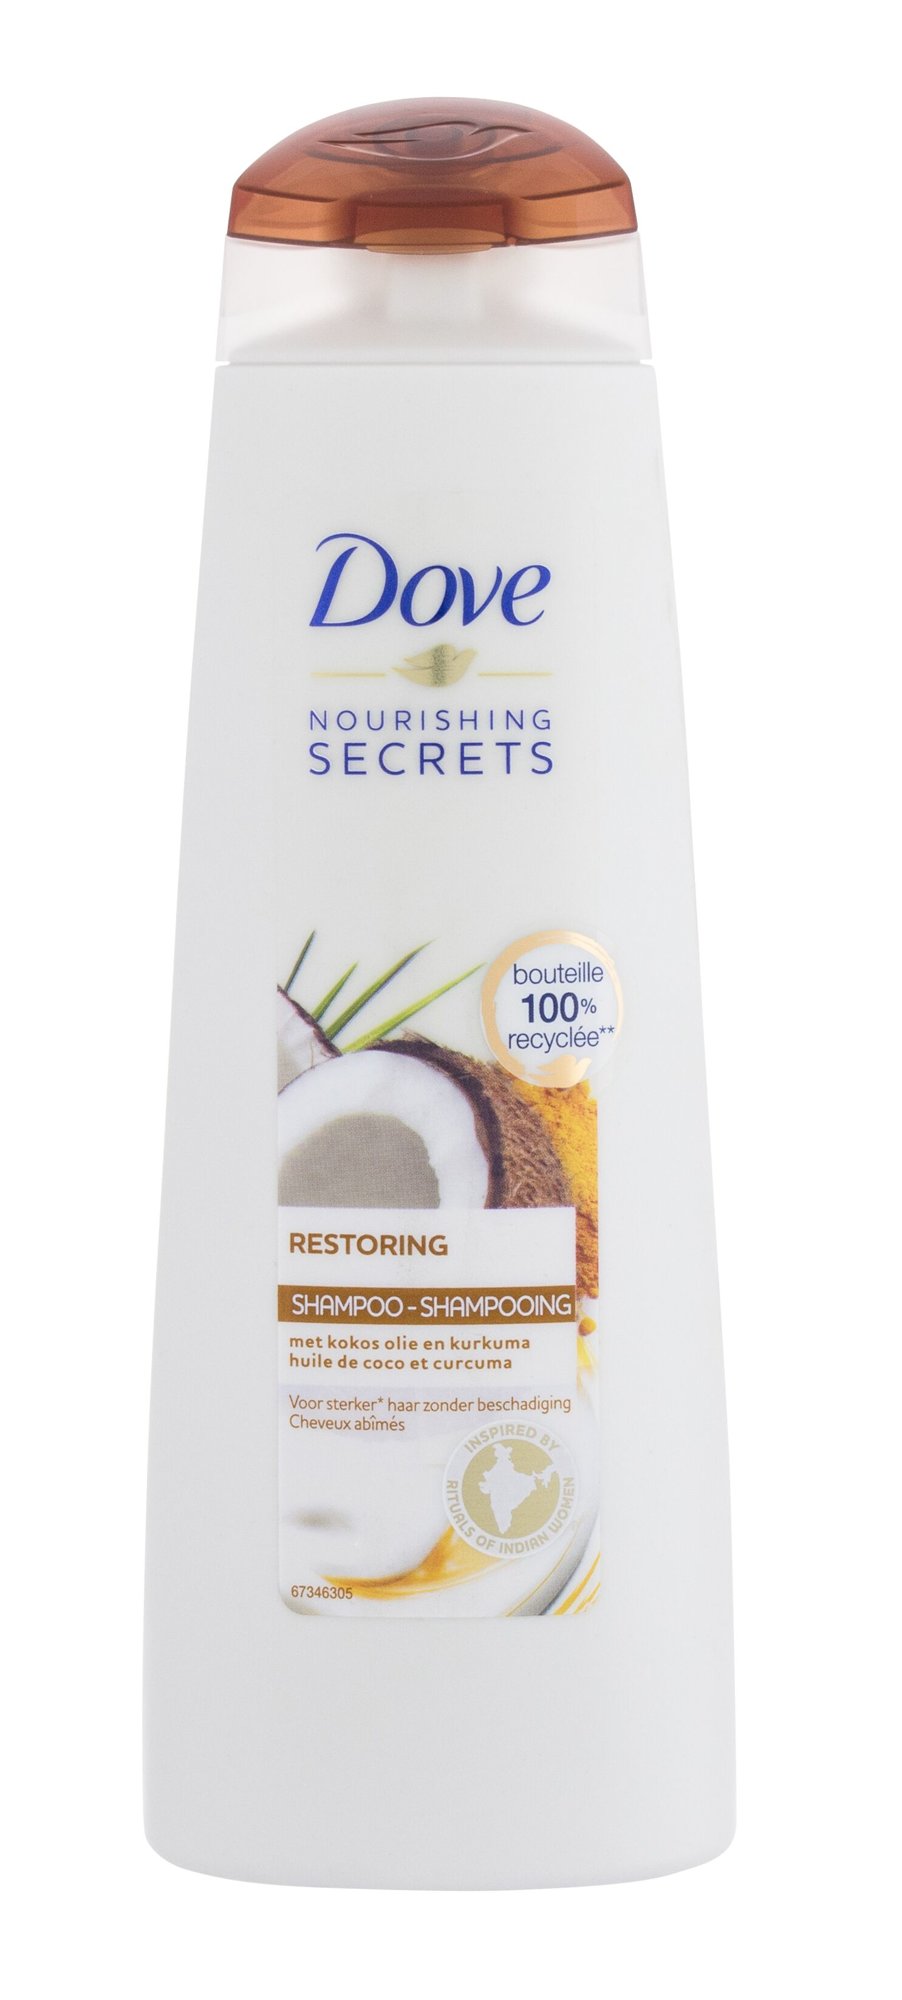 Dove Nourishing Secrets Restoring šampūnas